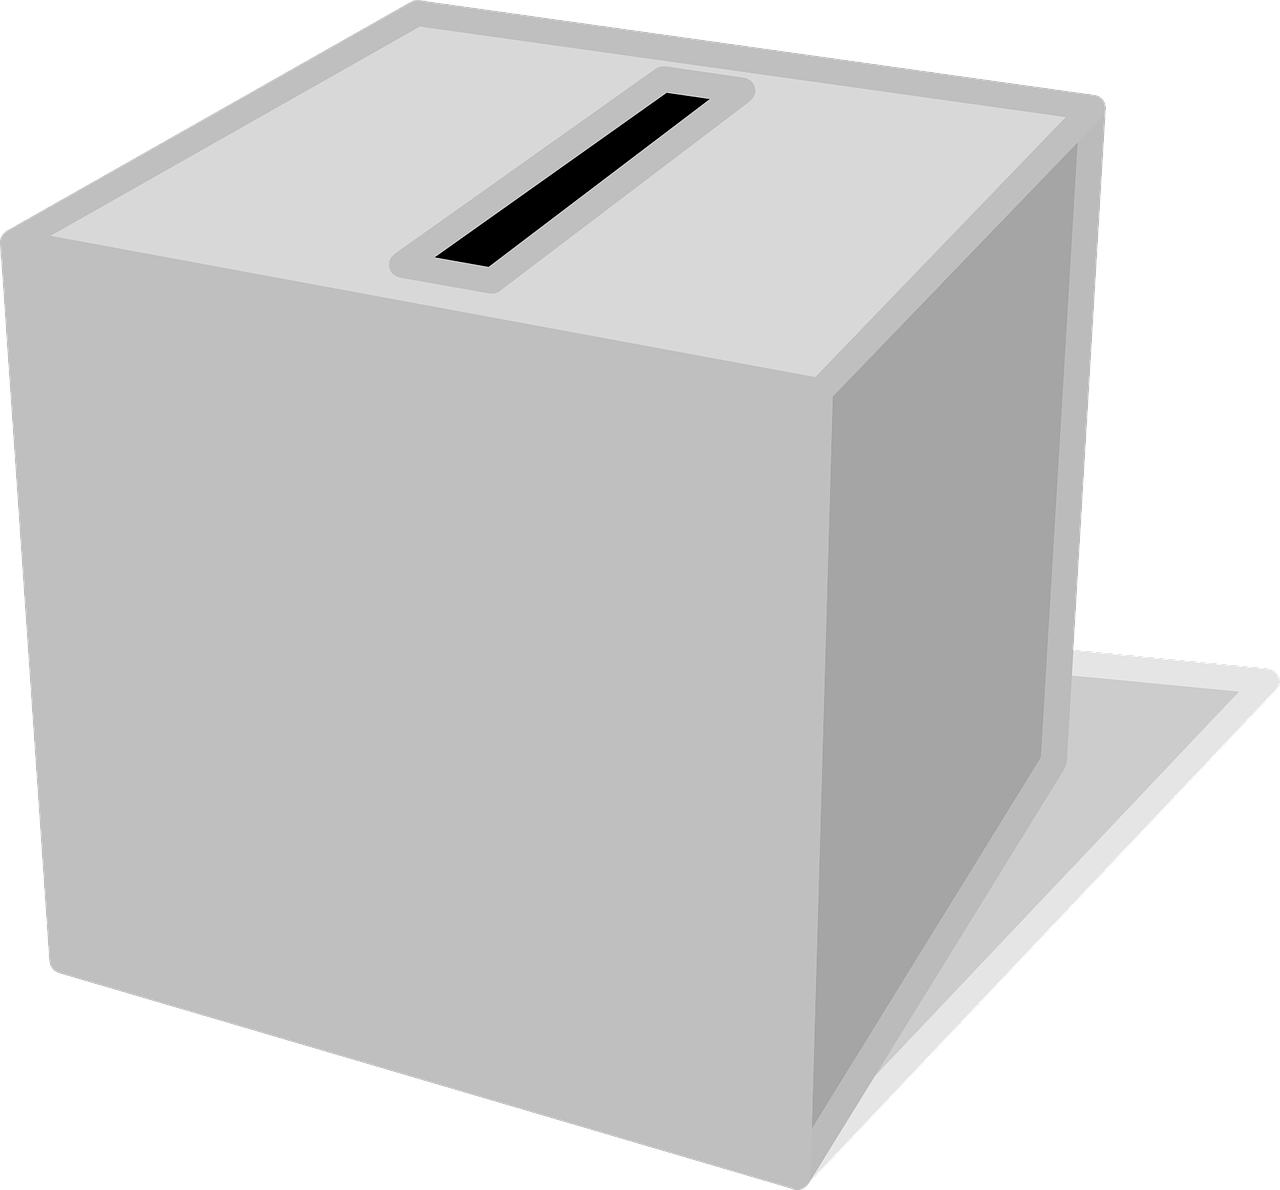 election vote box free photo